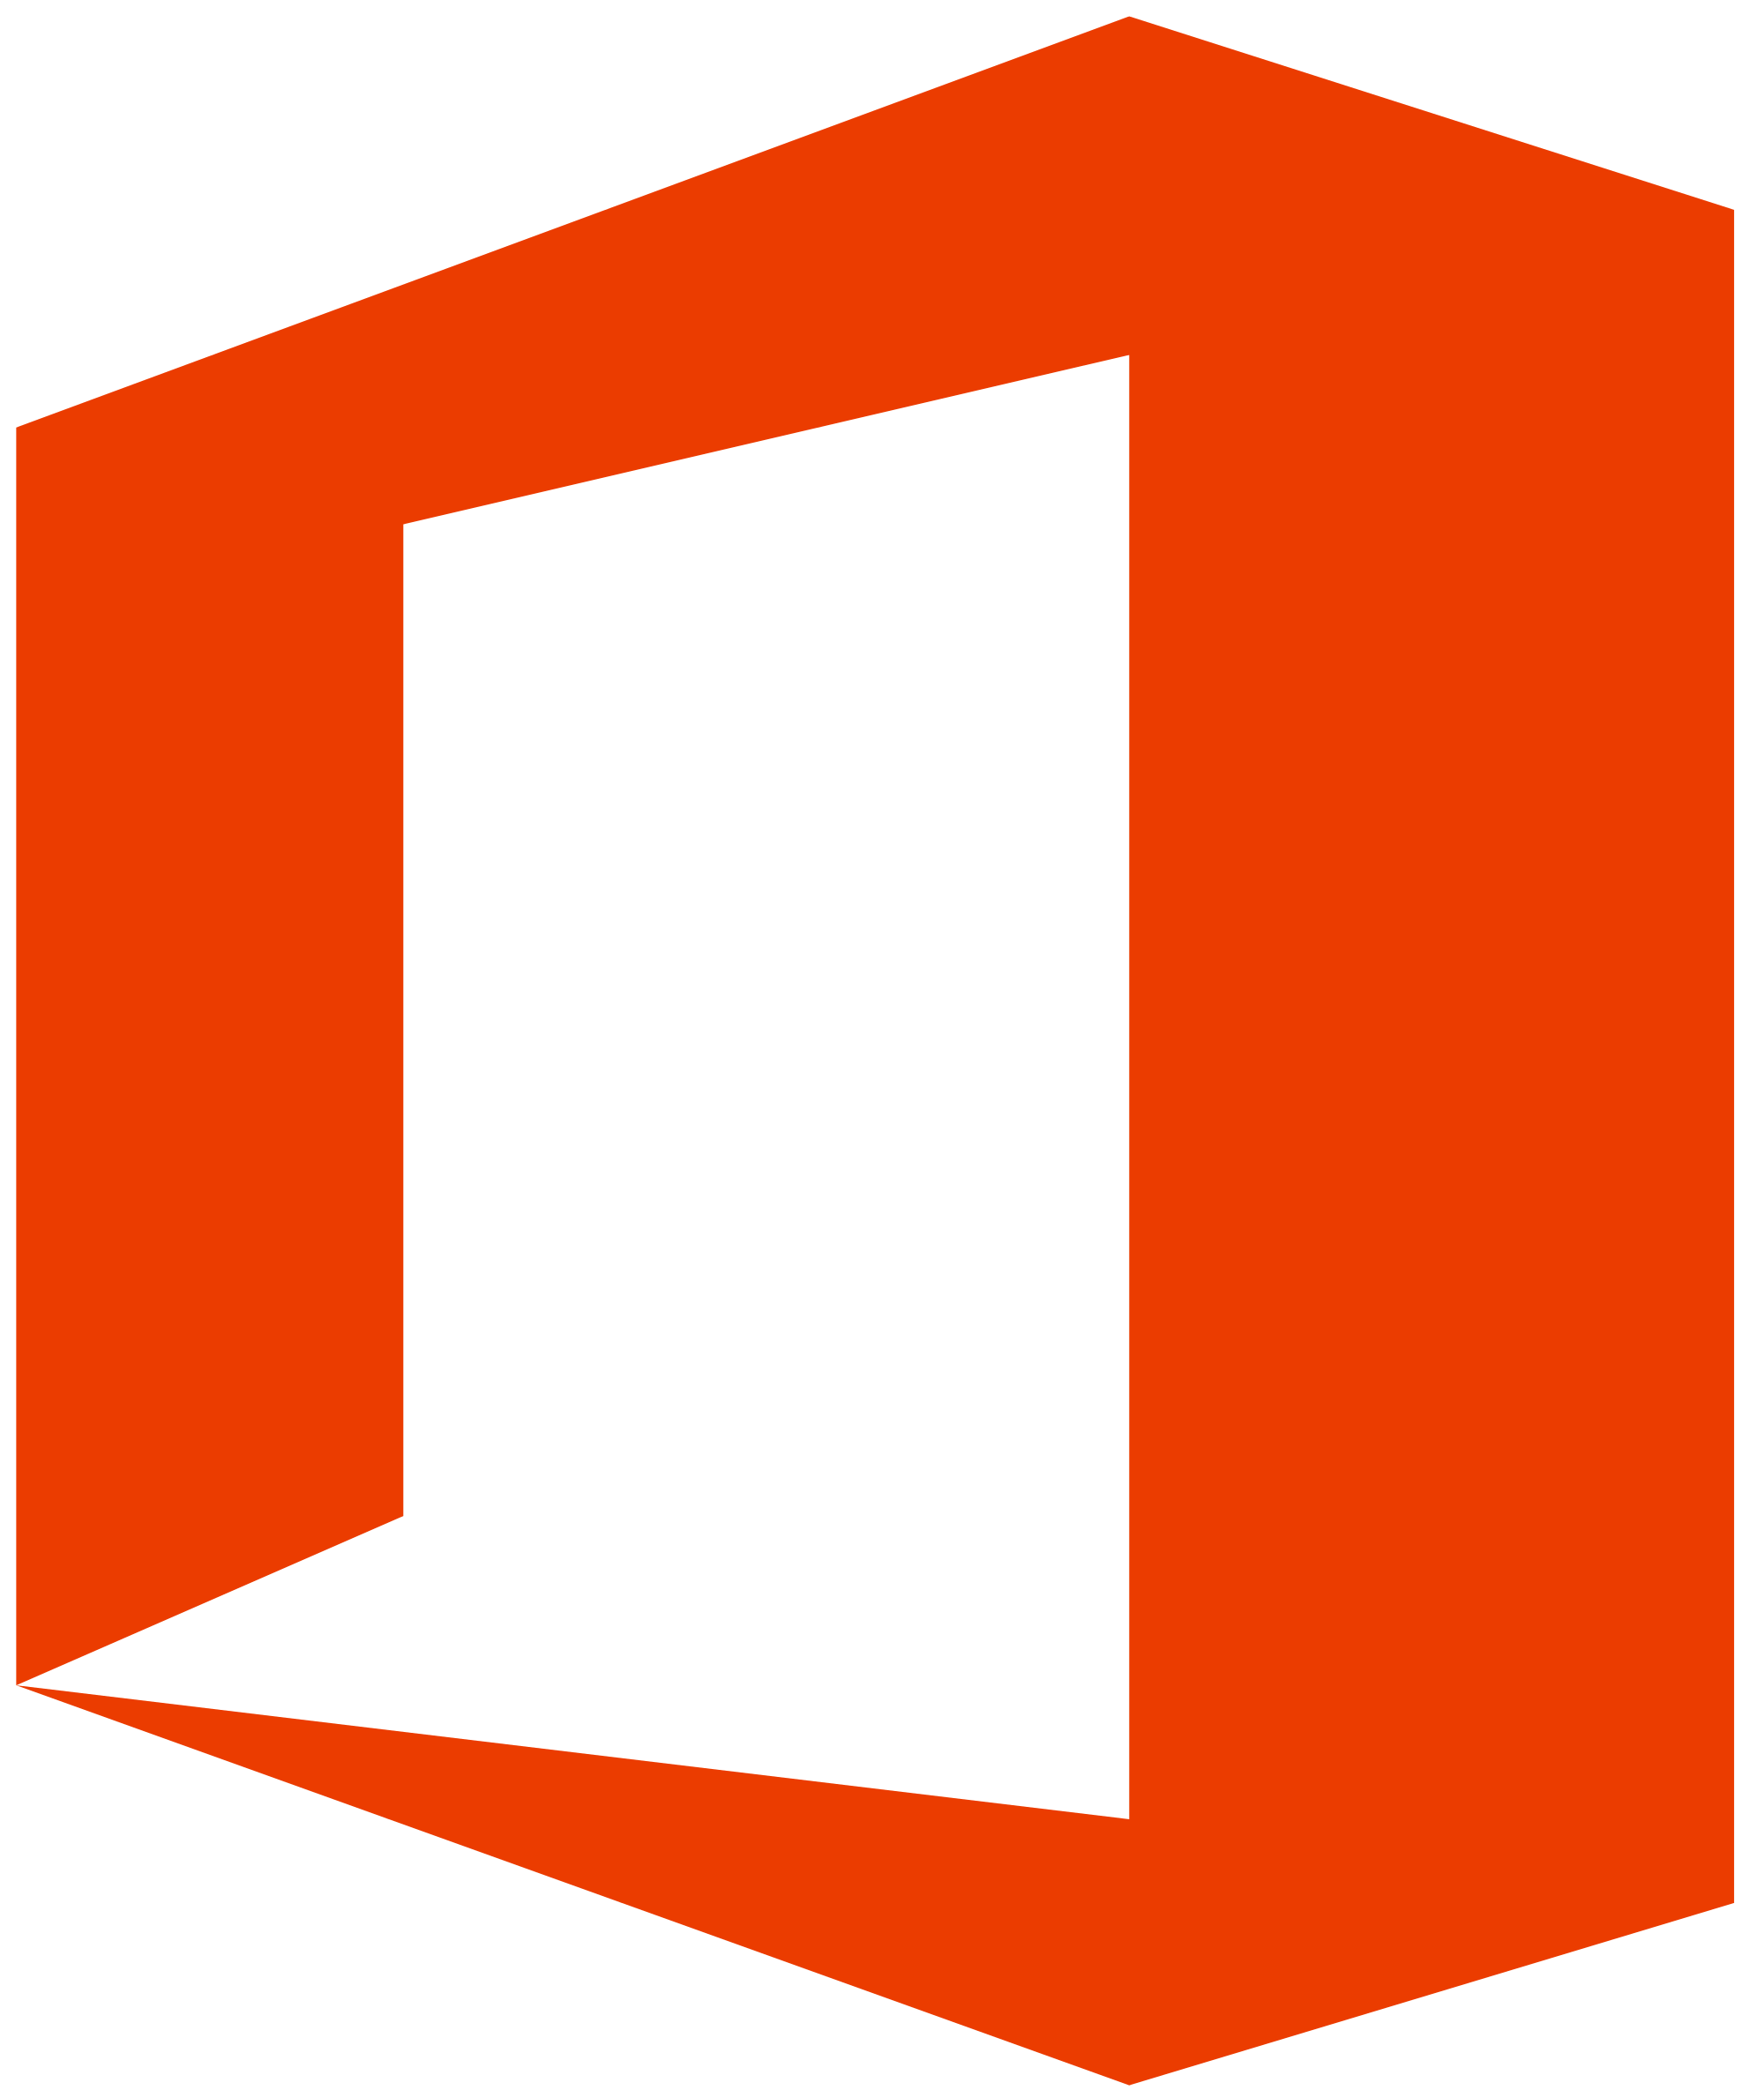 microsoft office logo 2018 png